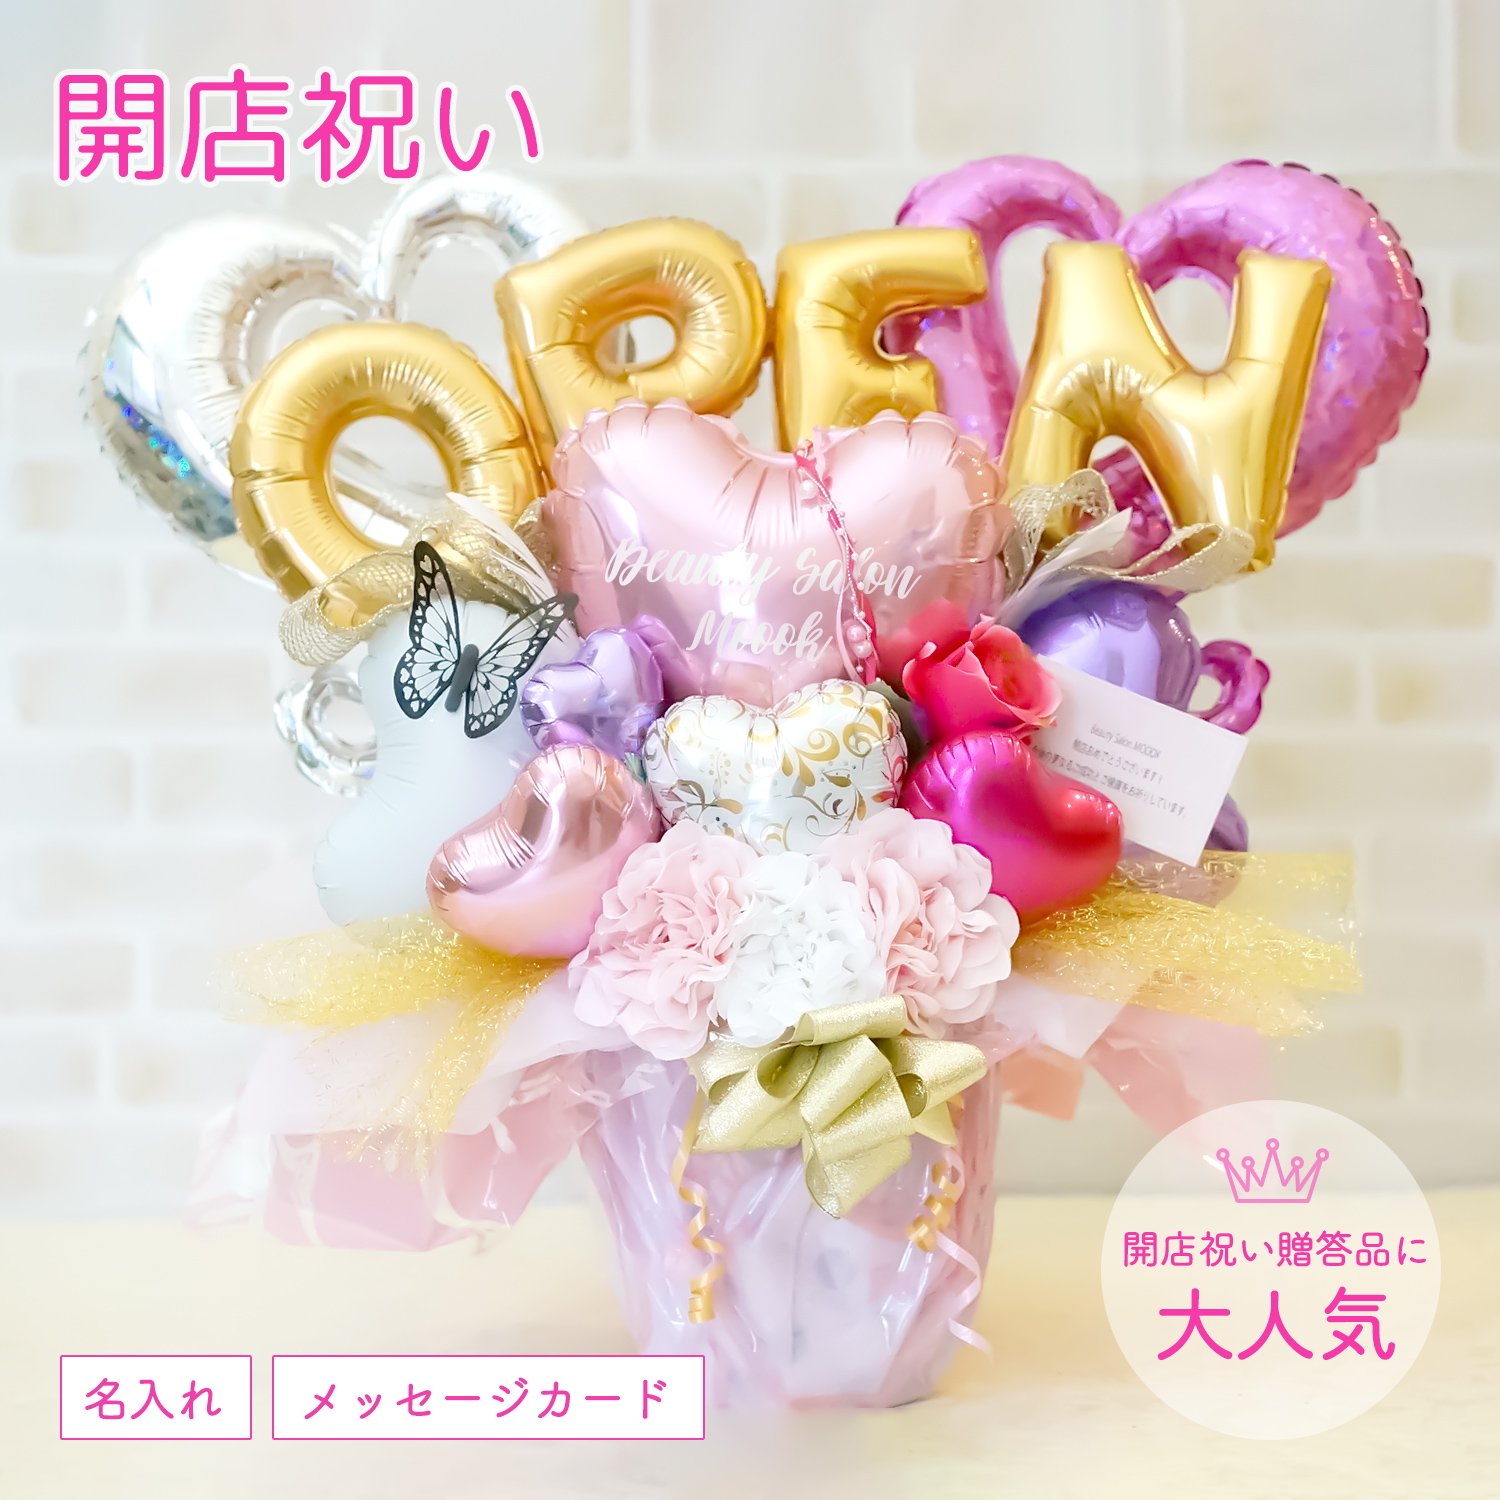 8 000 Open ピンク バルーン 風船 開店 開店祝い ピンク 豪華 オープン サプライズ プレゼント ギフト お祝い リボン 置き型 Sweet Heart Balloon